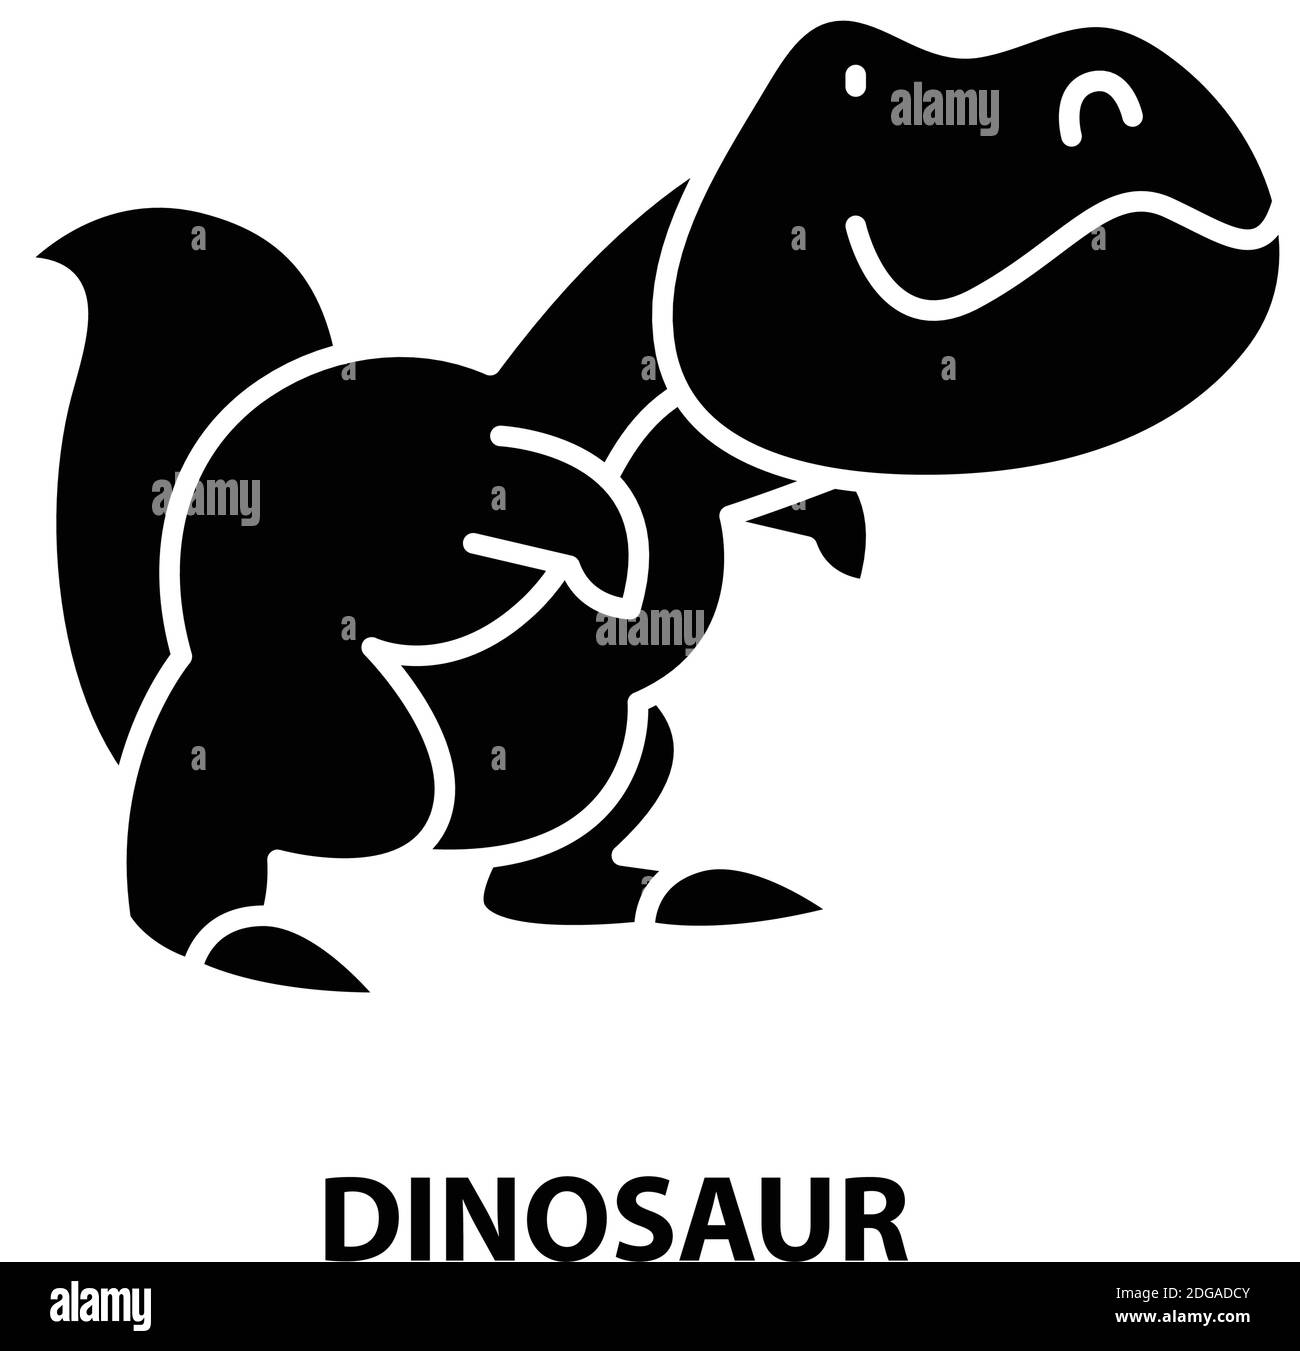 dinosaur icon, black vector sign with editable strokes, concept illustration Stock Vector